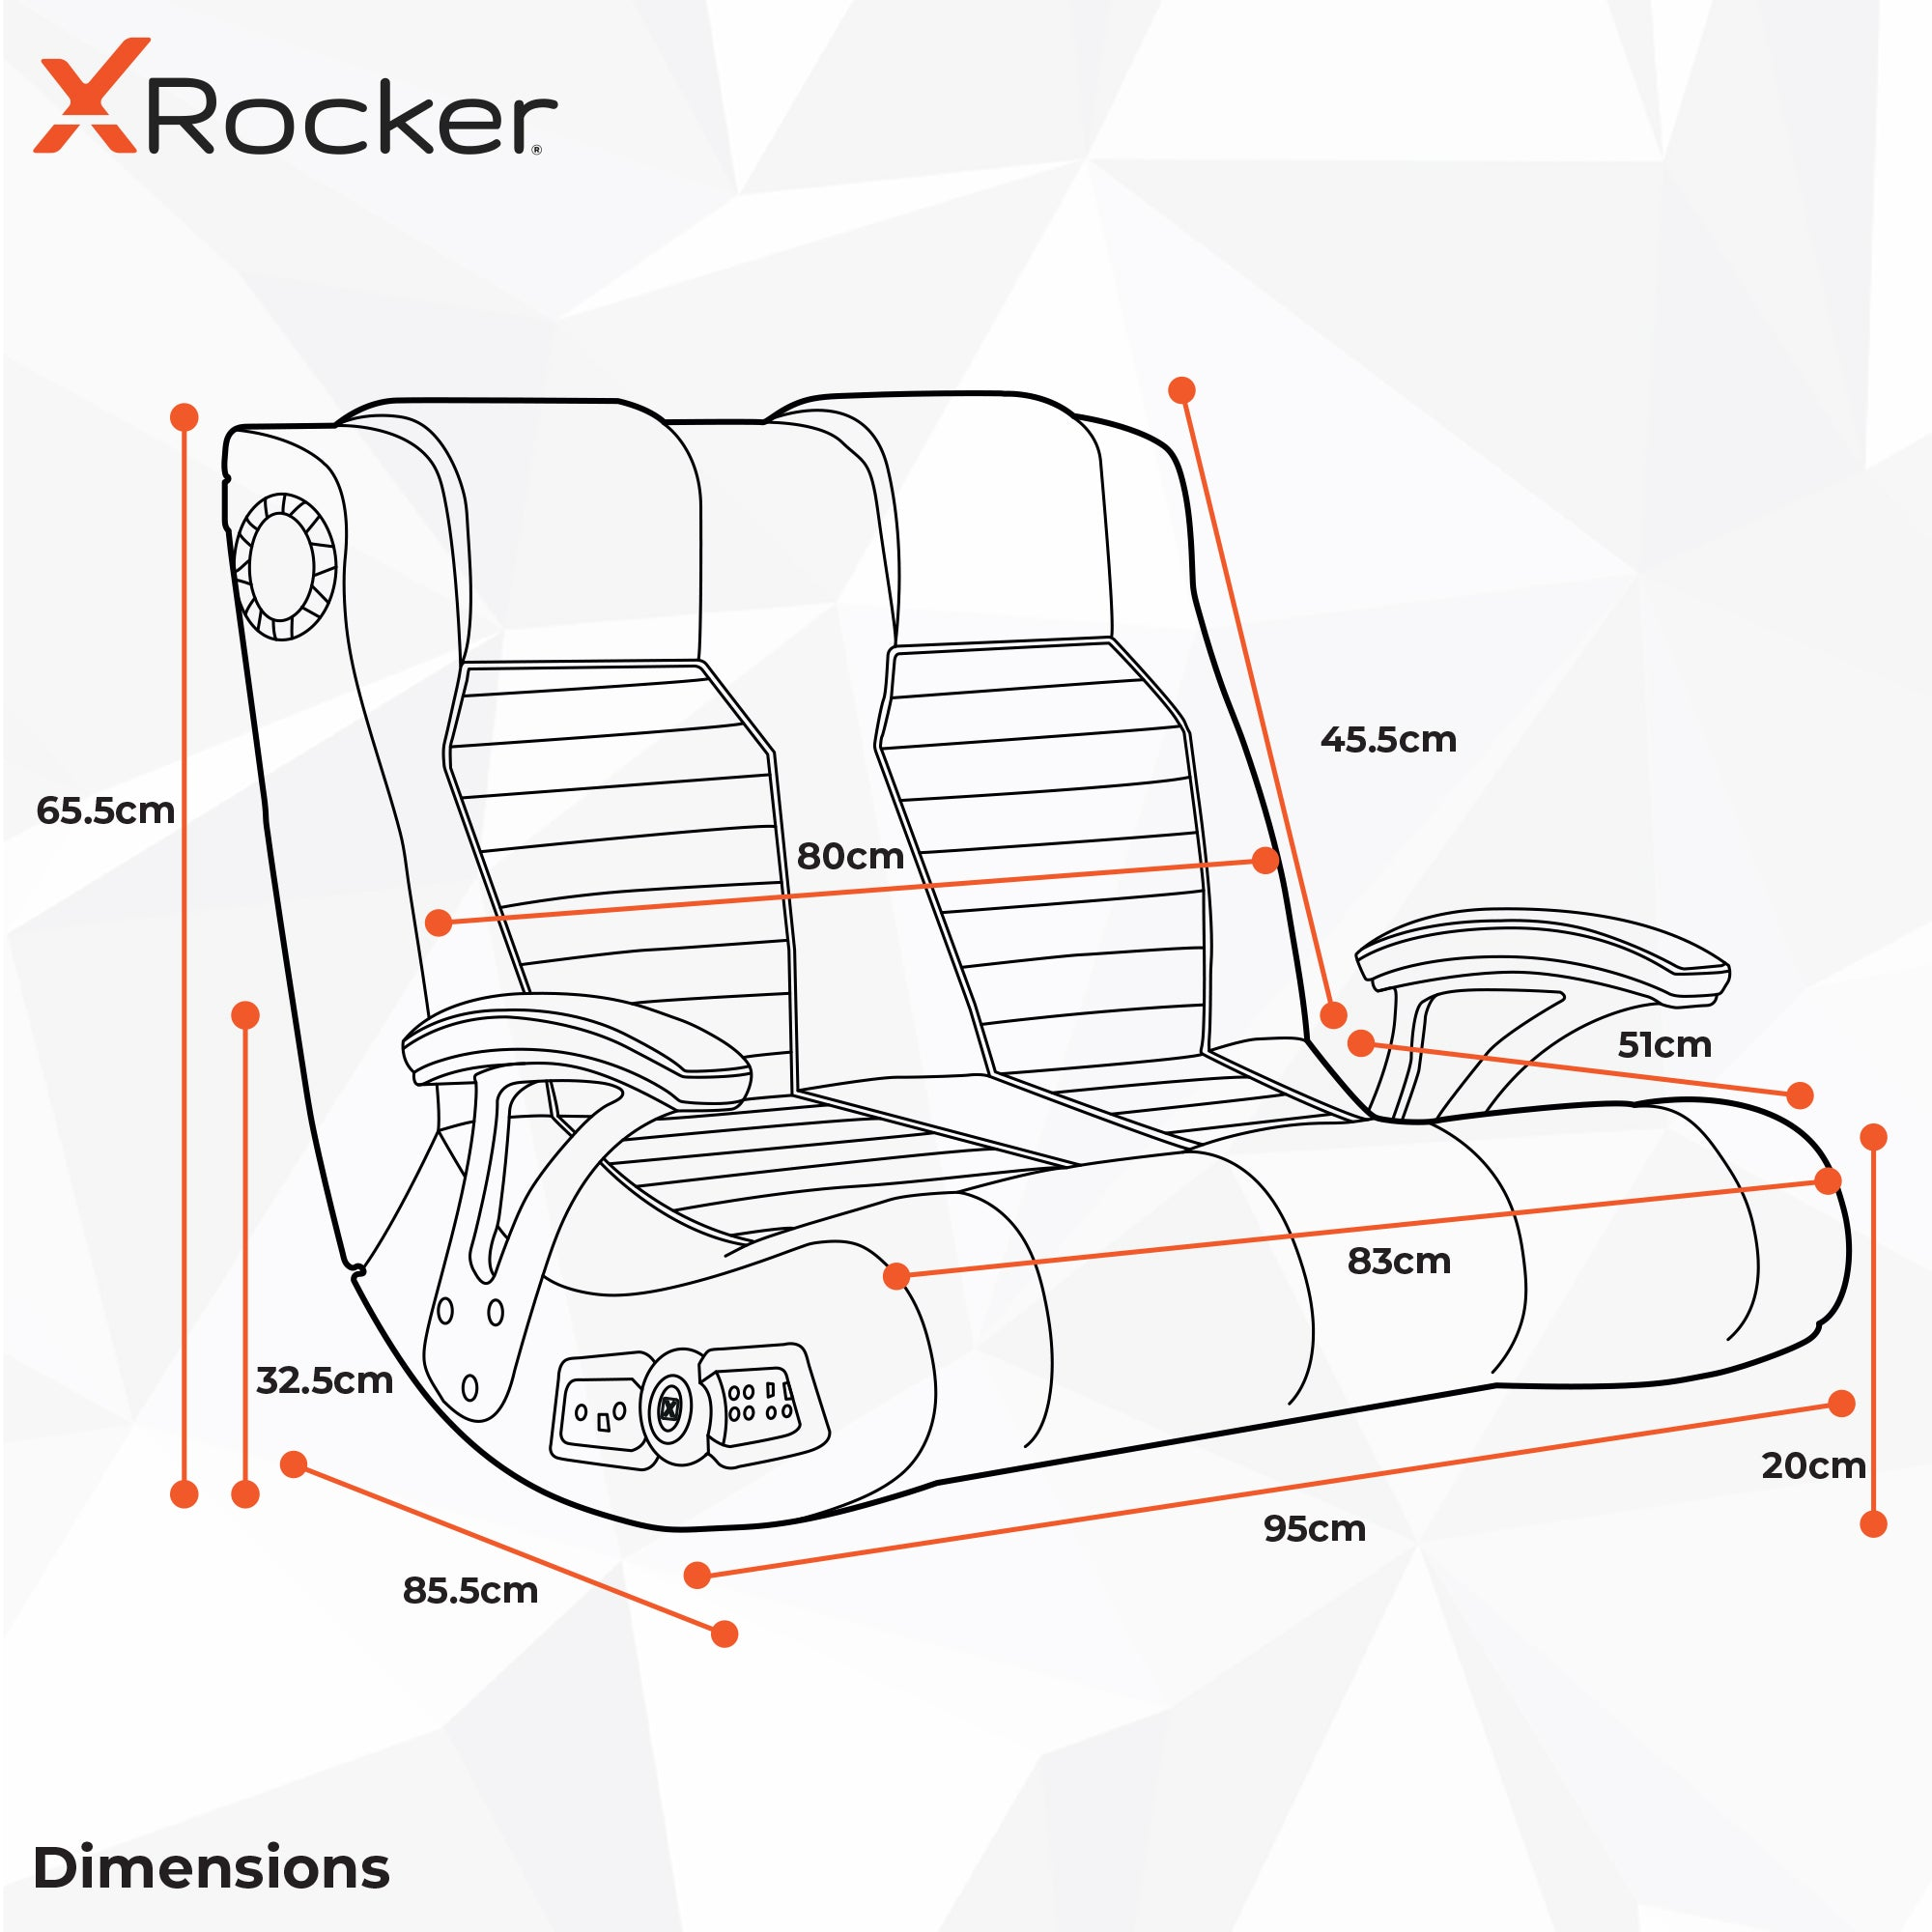 X ROCKER Dual Rocker Nintendo® Multicolor Bodensessel